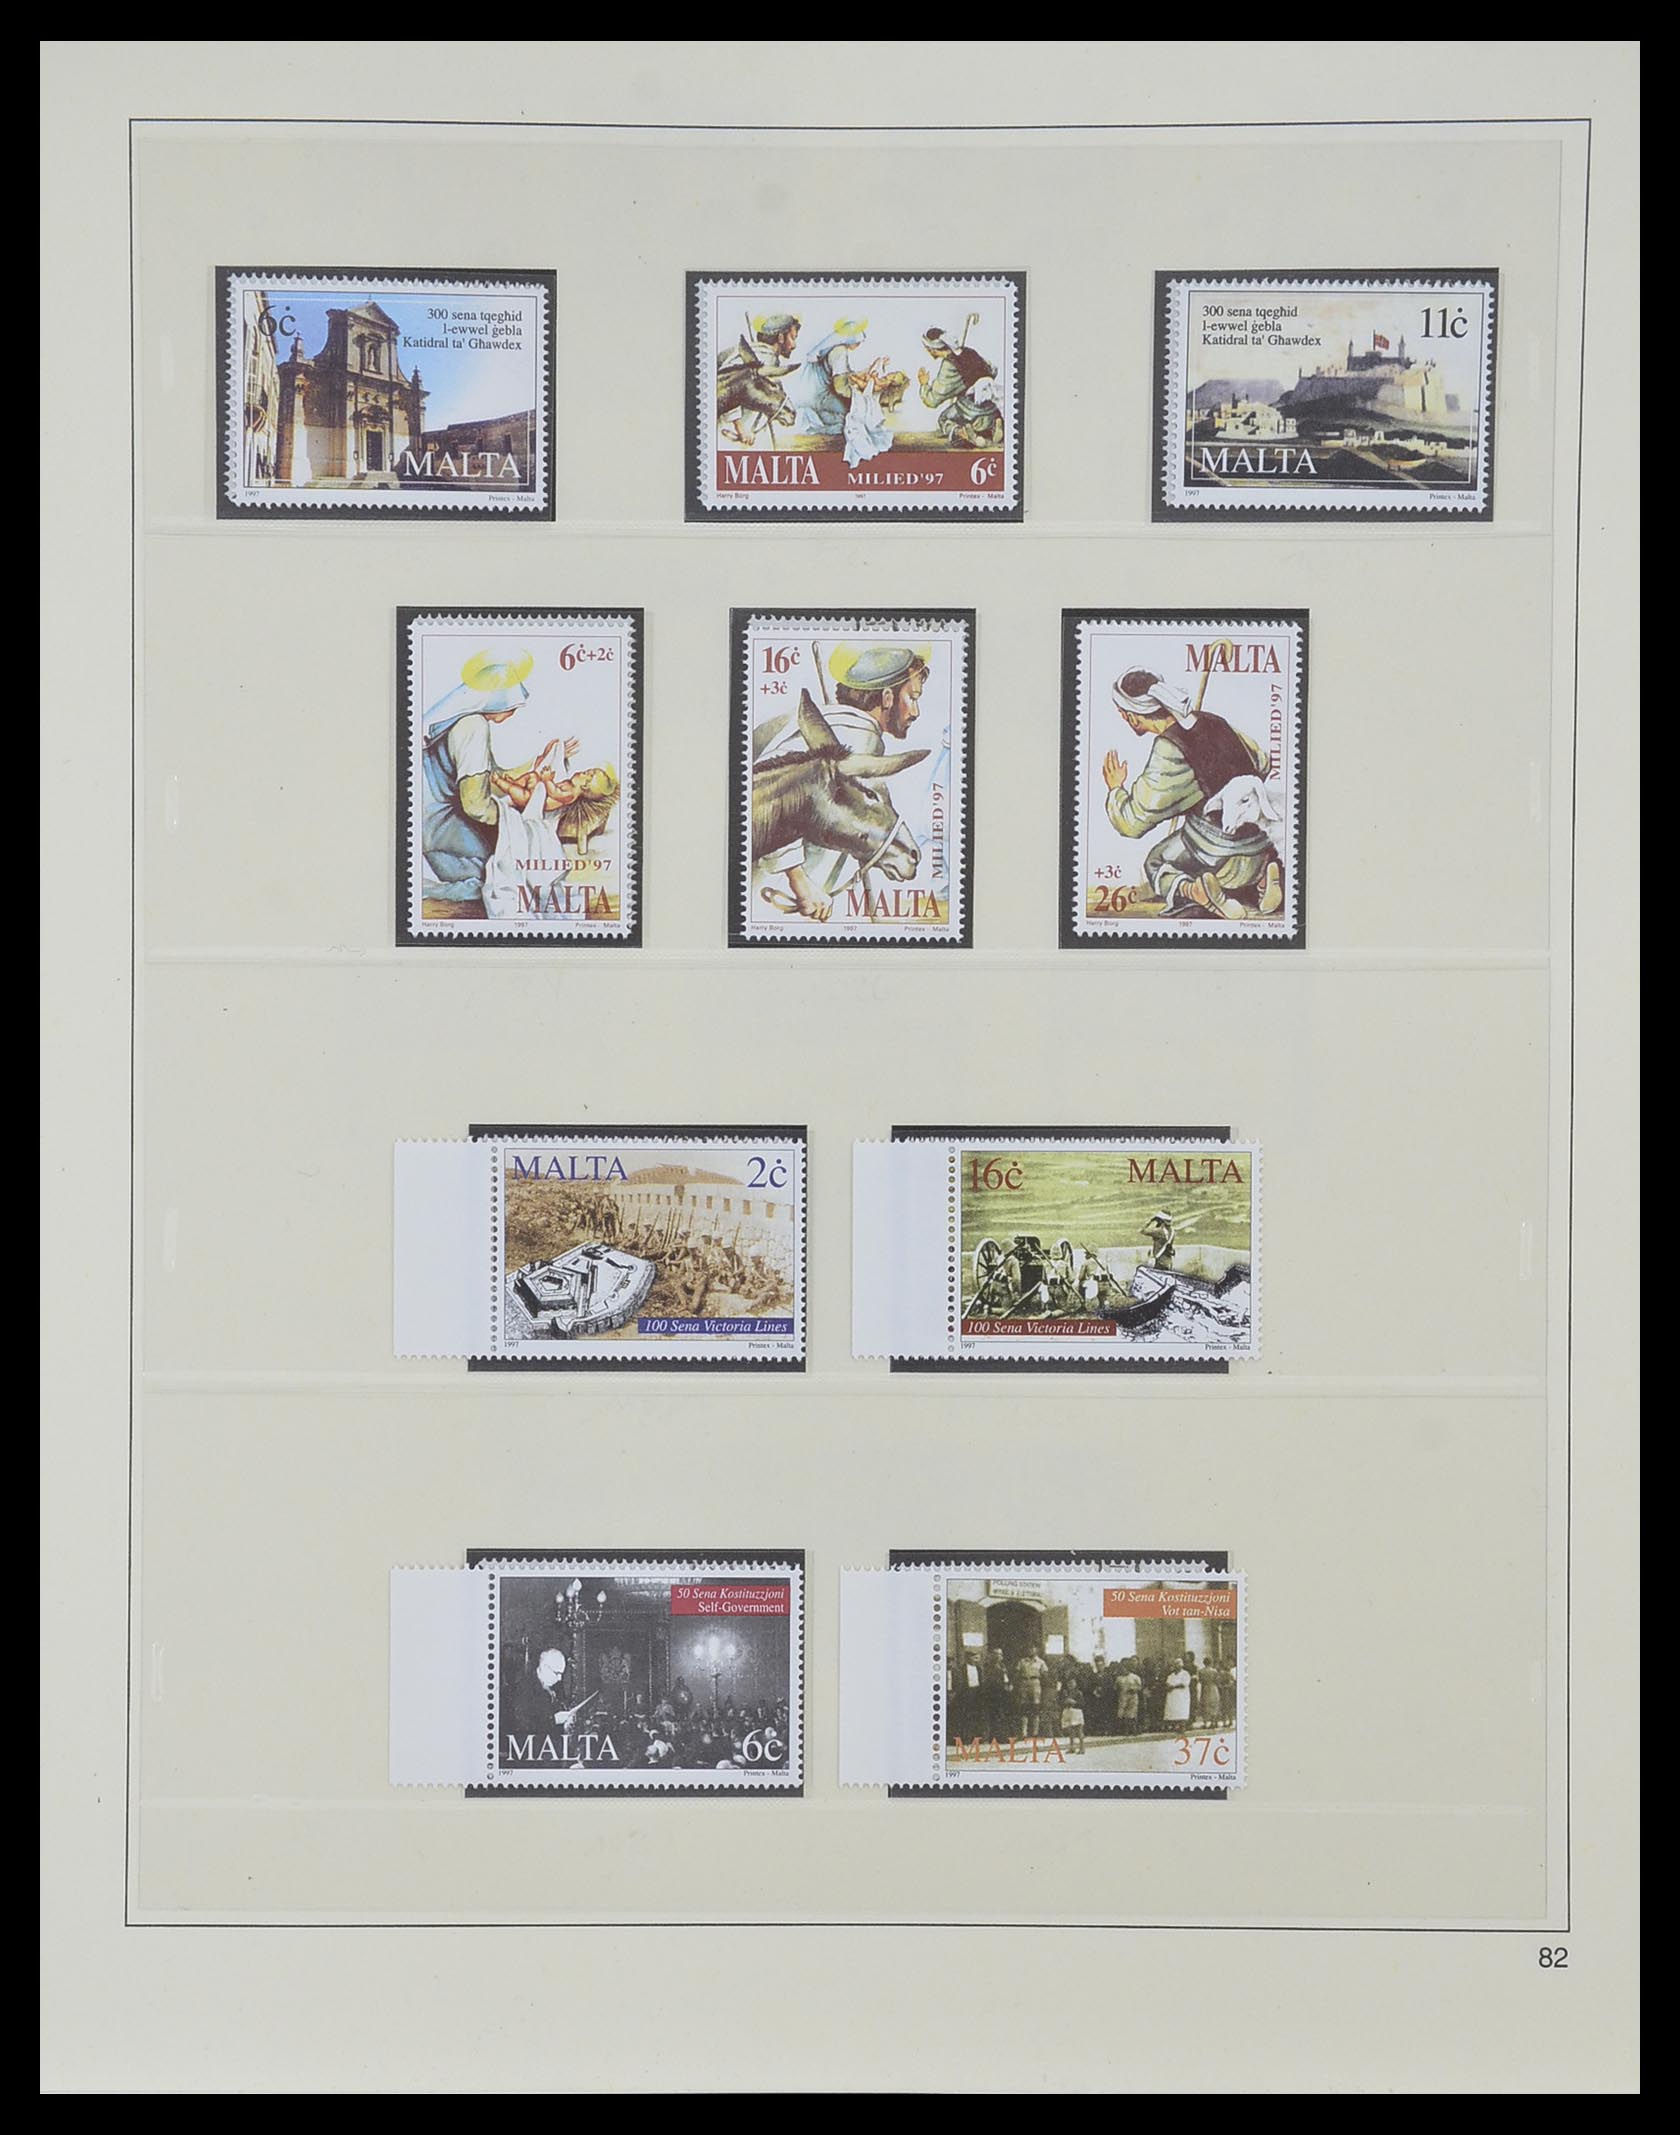 33968 181 - Stamp collection 33968 Malta 1861-2001.